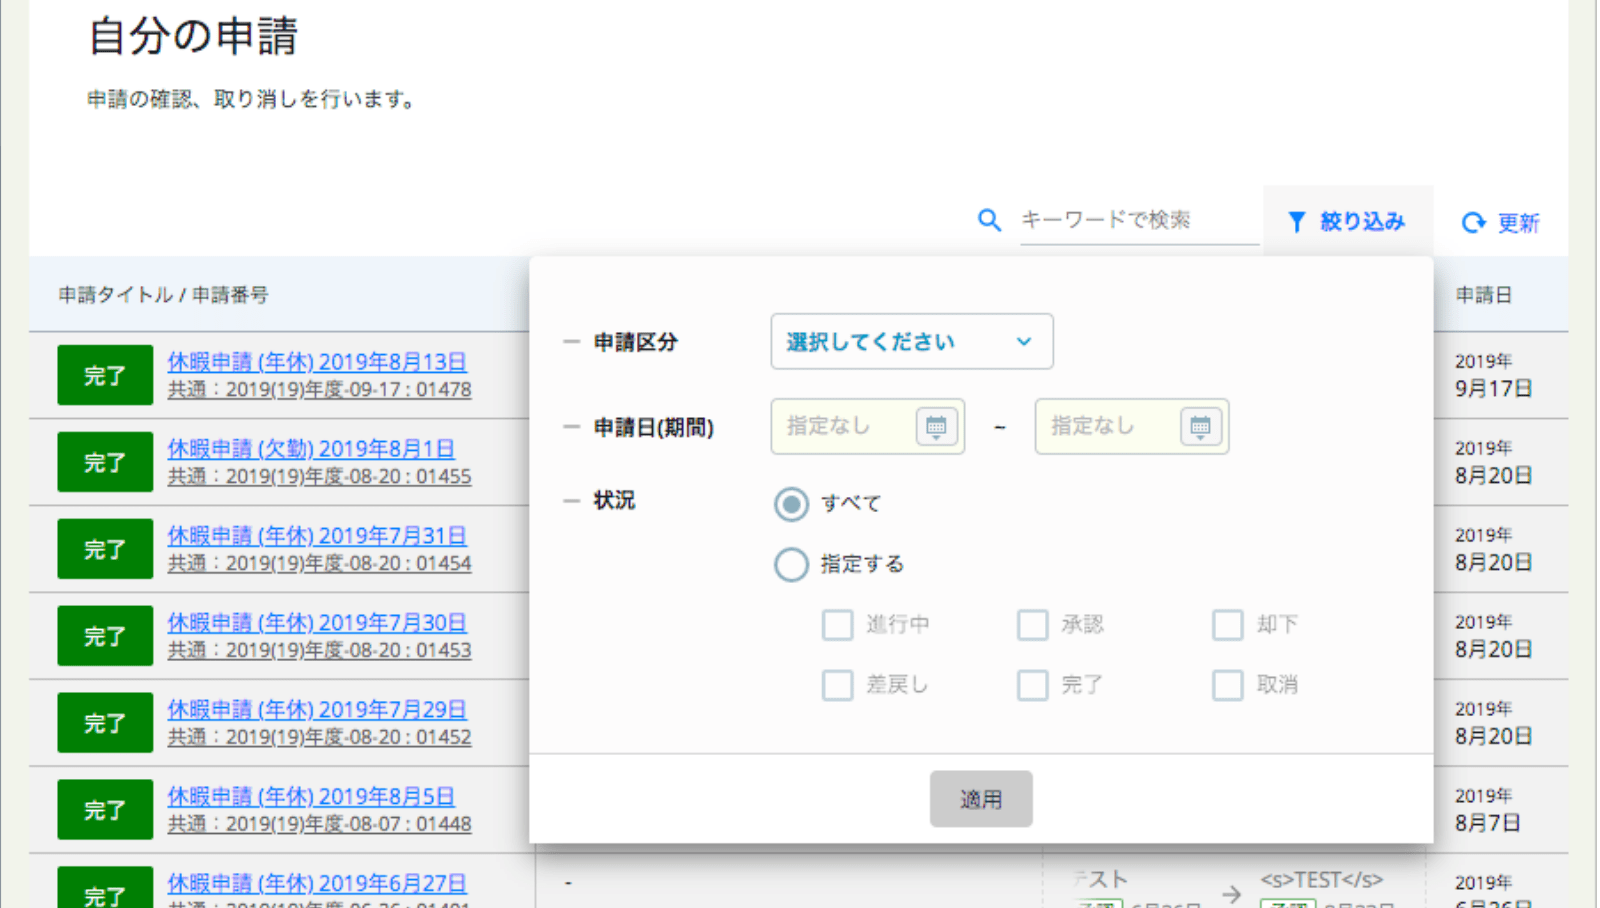 rakumo キンタイ 自分の申請画面の検索・絞り込み